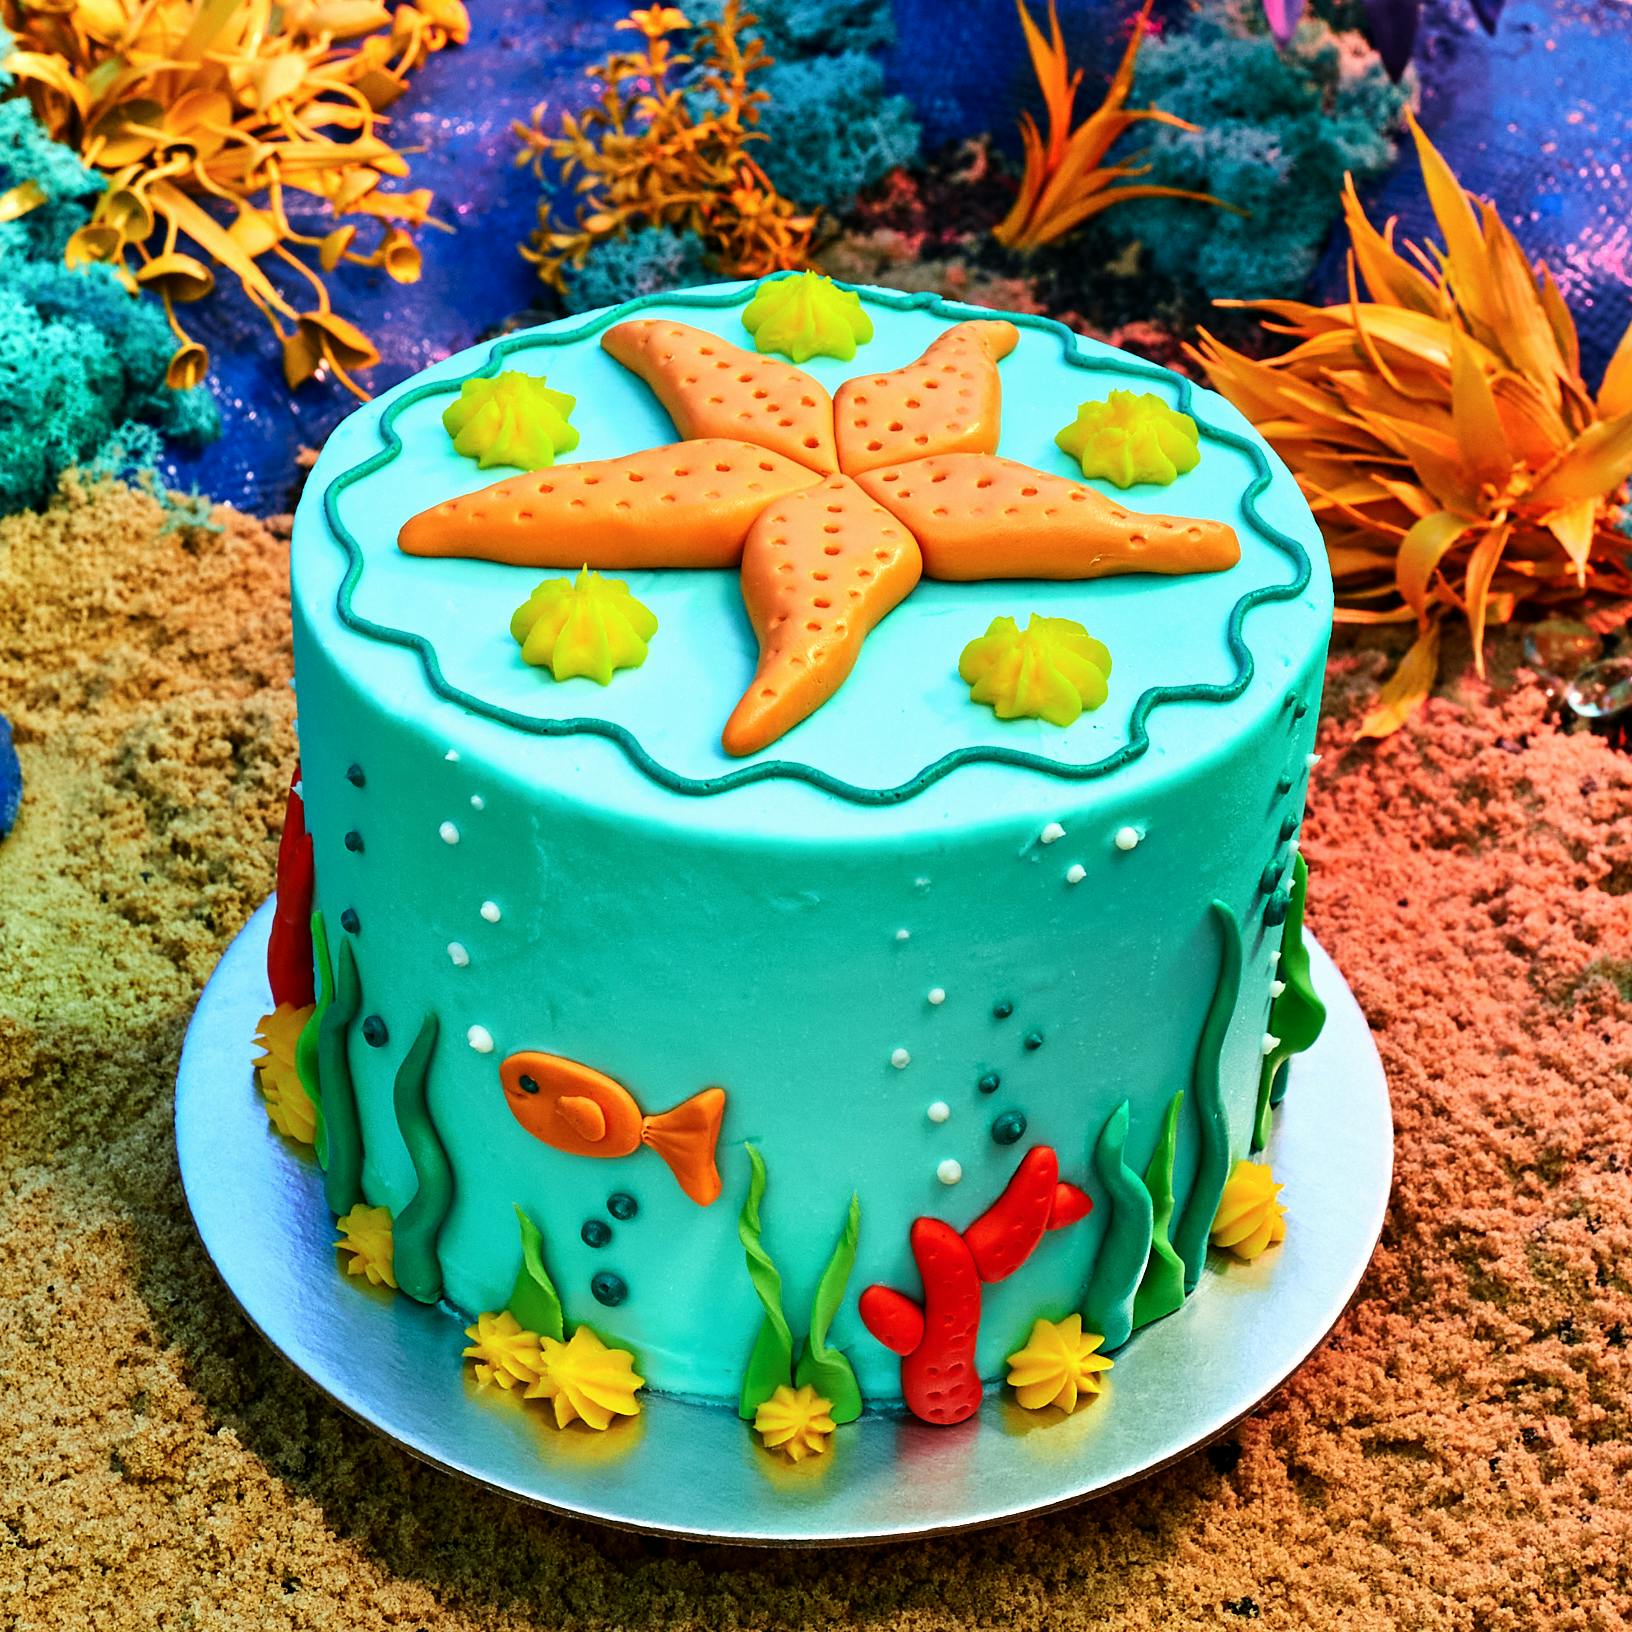 21,492 Sea Cake Images, Stock Photos & Vectors | Shutterstock